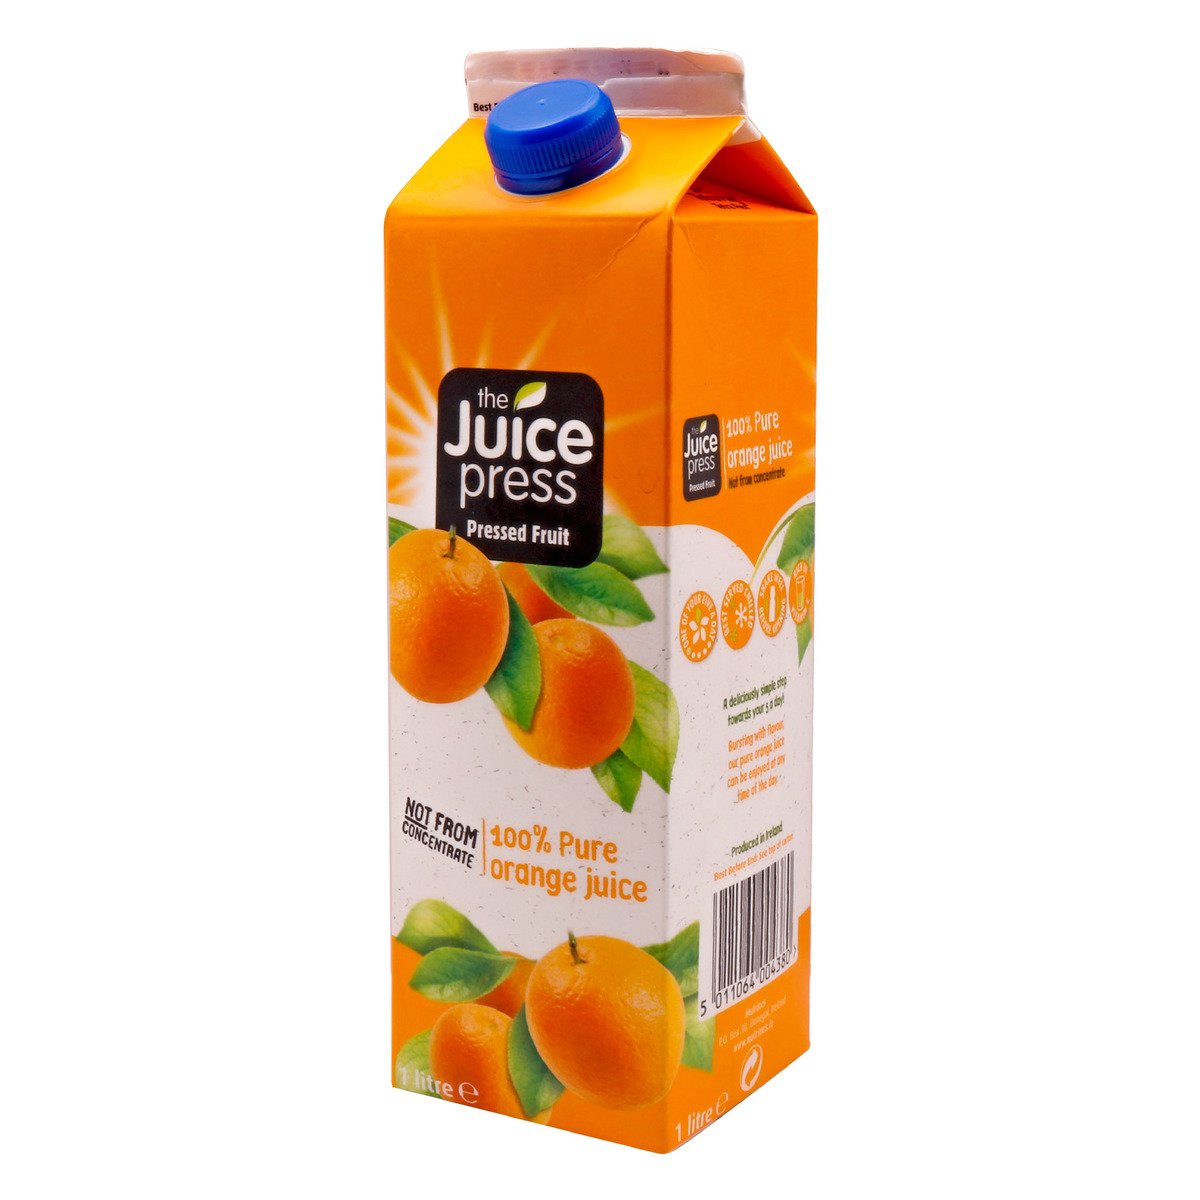 ذا جوس بريس عصير برتقال نقي 1 لتر